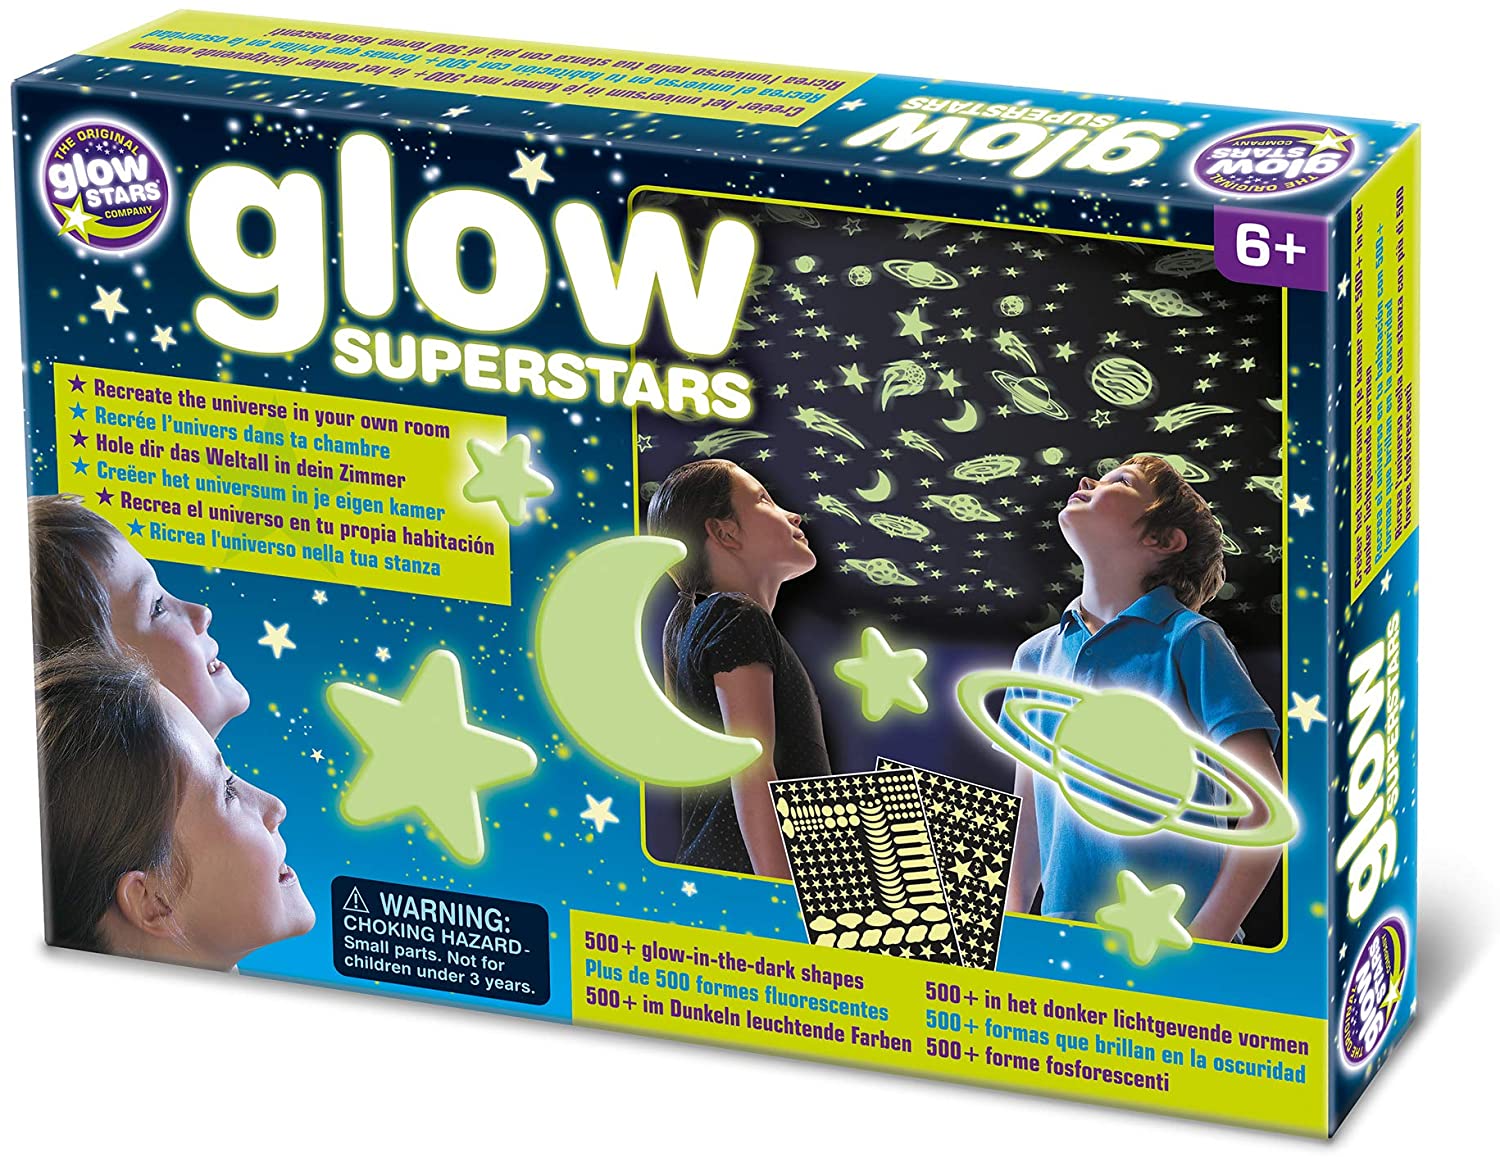 Glow Superstars